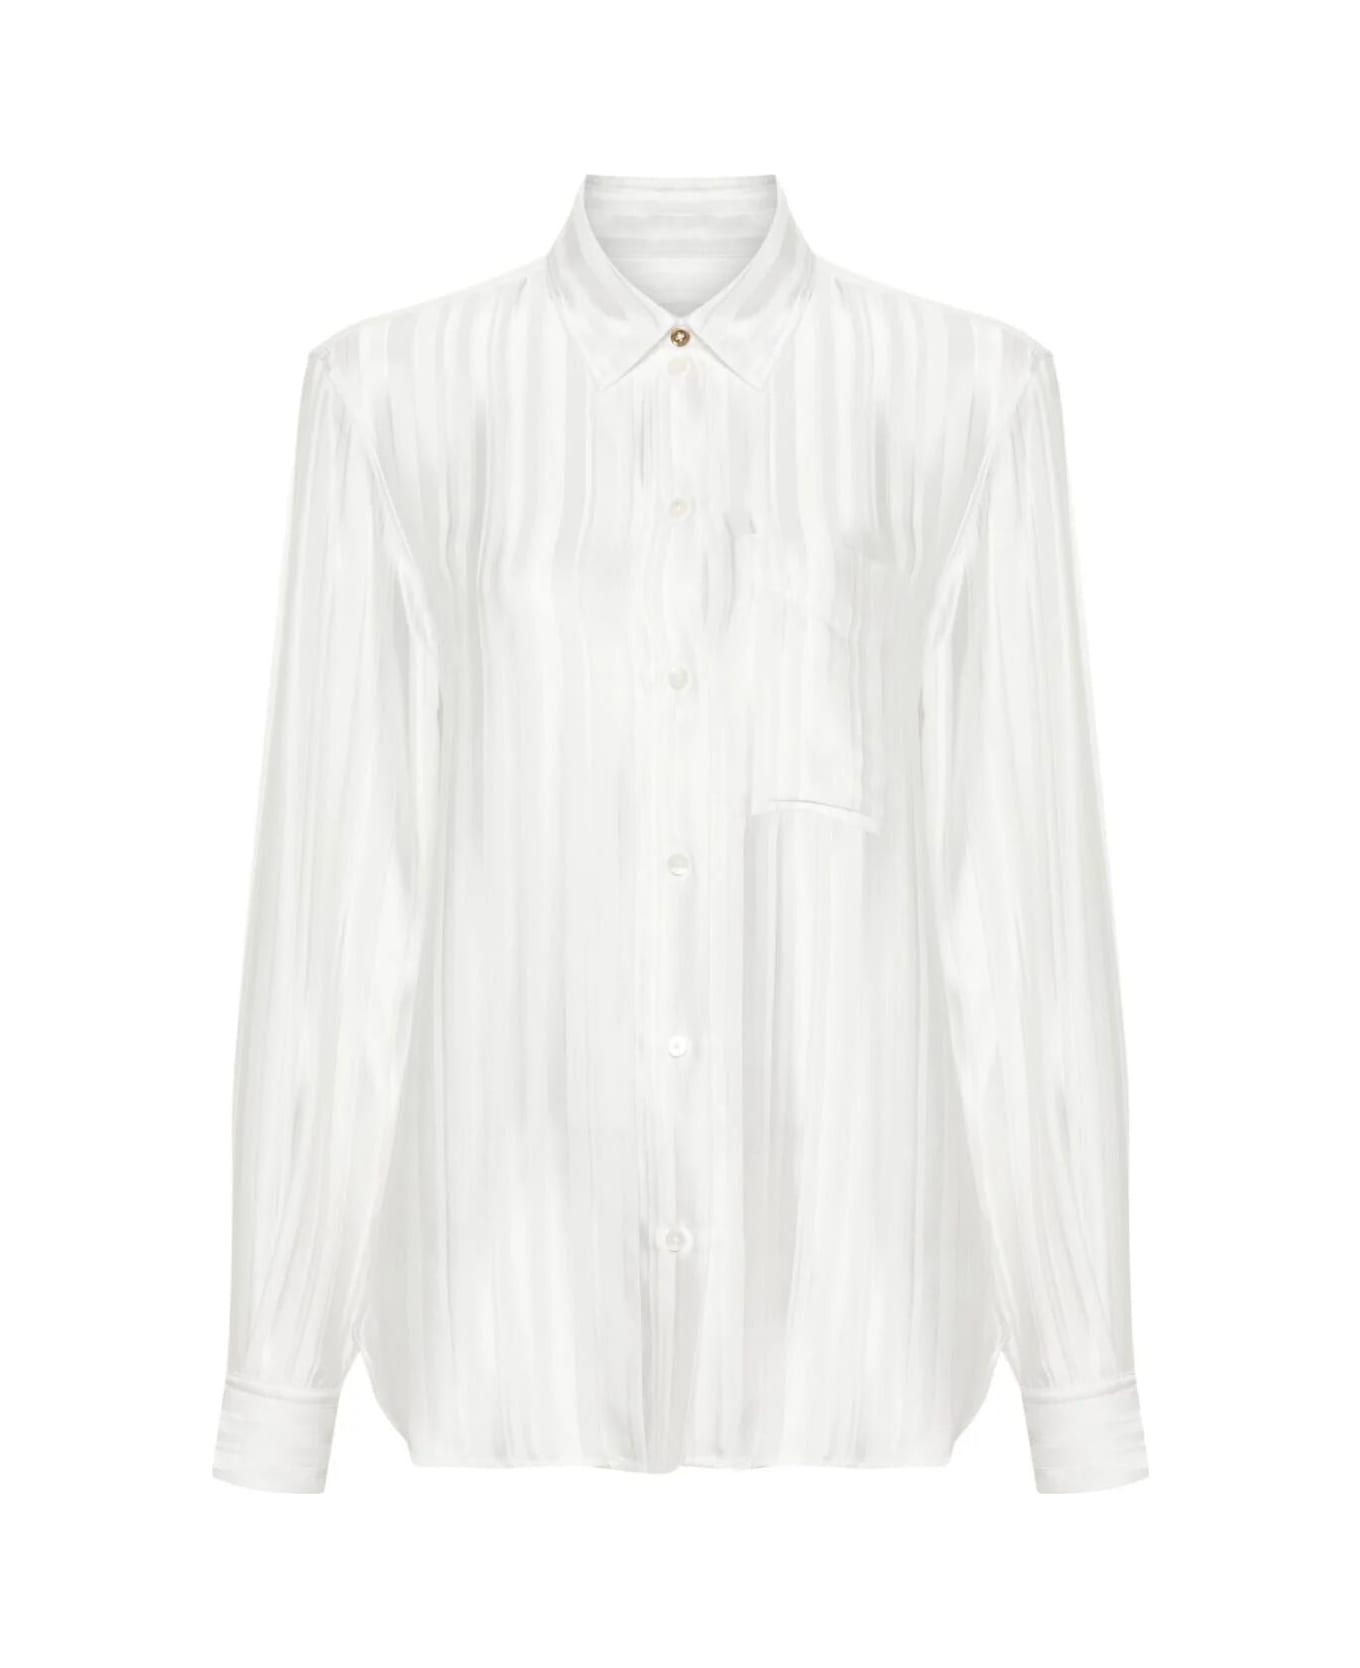 Paul Smith Classic Shirt - Ivory シャツ